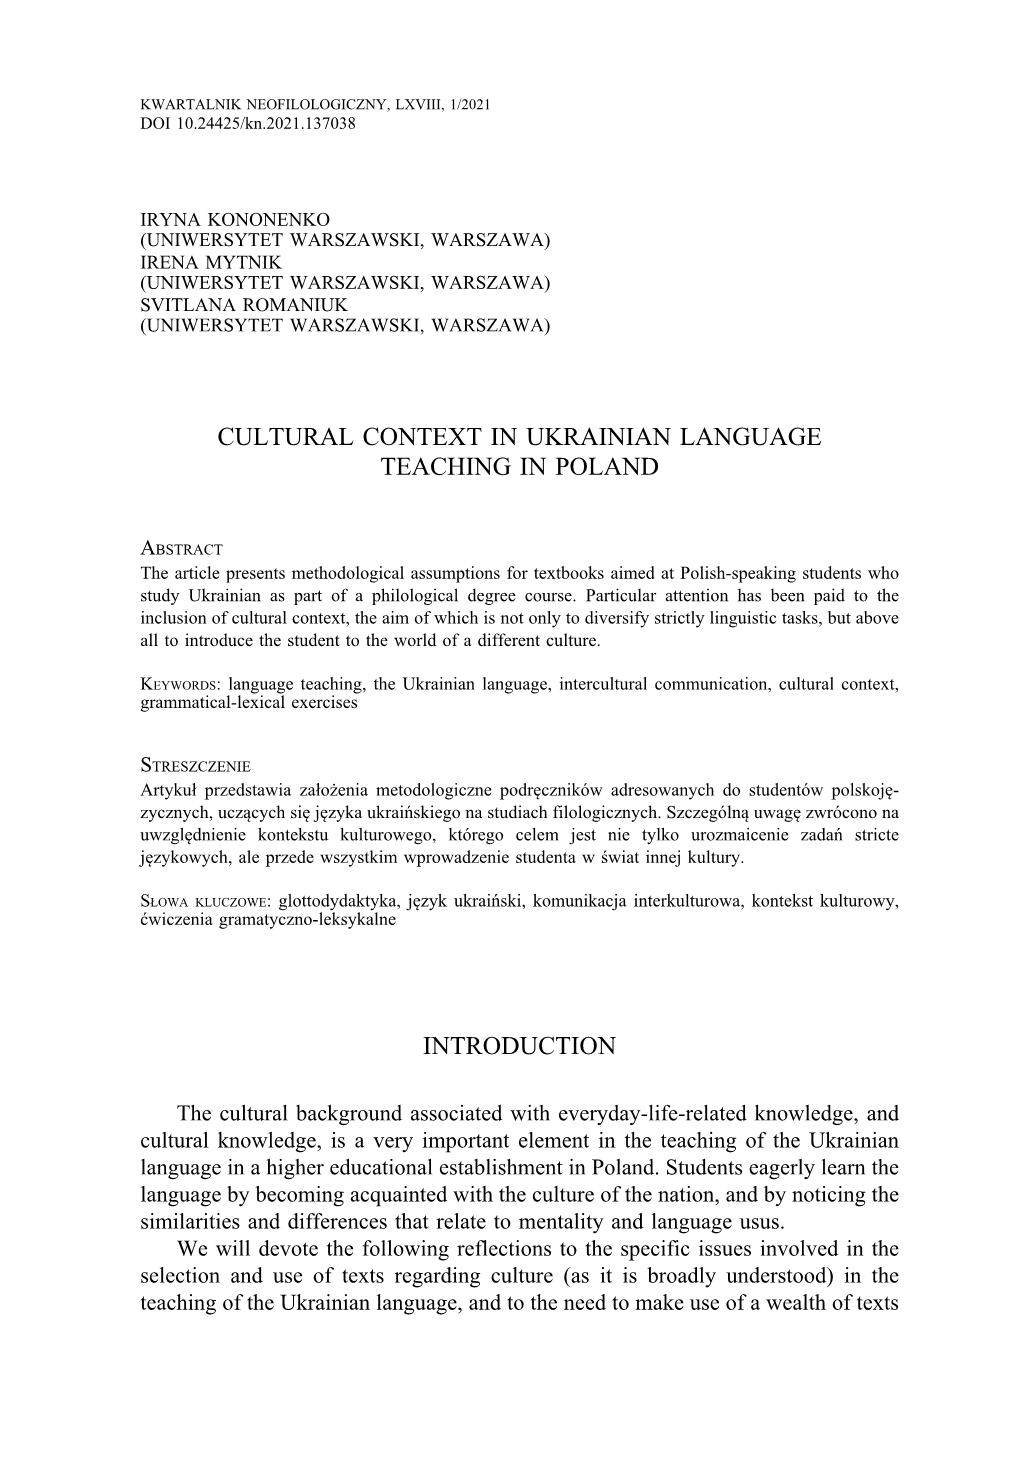 Cultural Context in Ukrainian Language Teaching in Poland